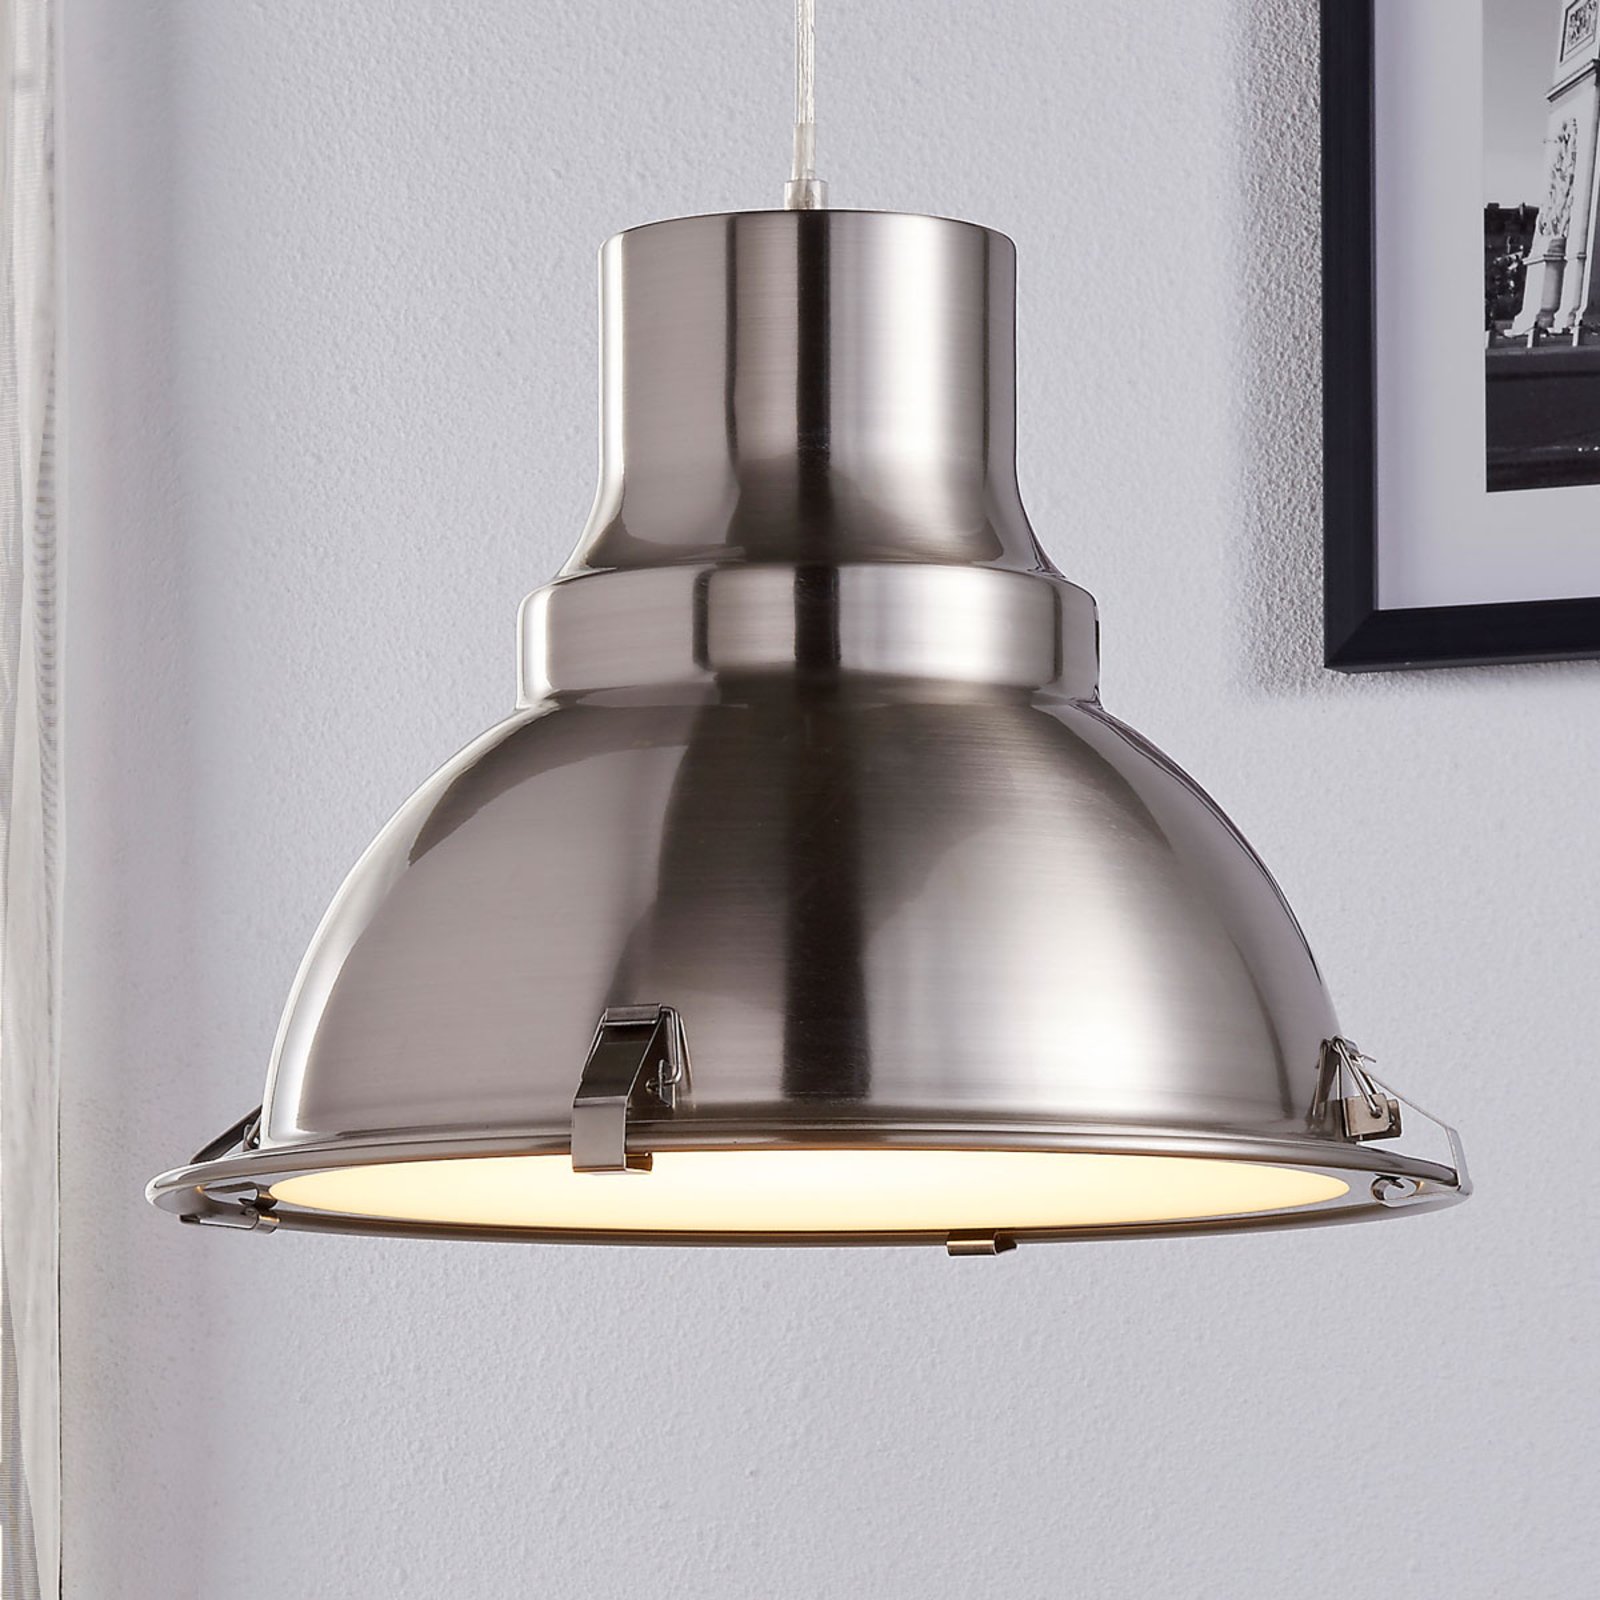 Letty ipari stílusú függő lámpa